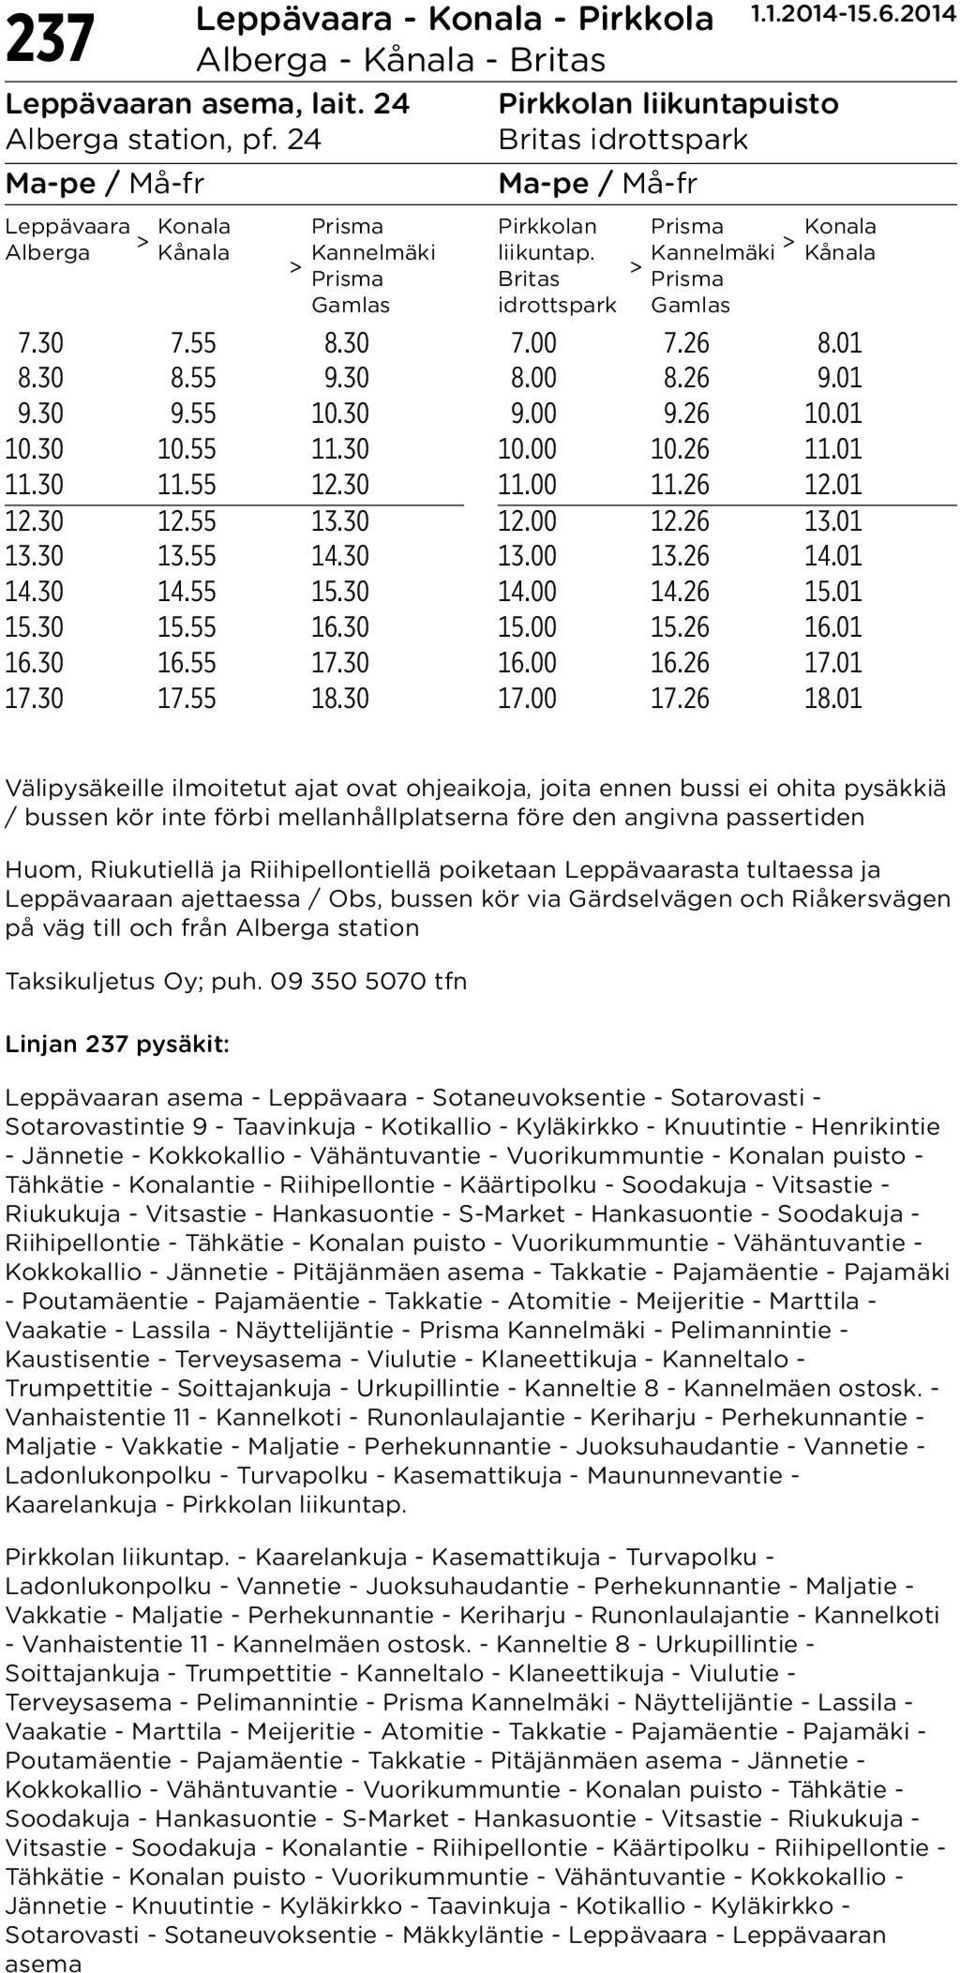 Kannelmäki Kånala > Prisma Britas > Prisma Gamlas idrottspark Gamlas 7.30 7.55 8.30 7.00 7.26 8.01 8.30 8.55 9.30 8.00 8.26 9.01 9.30 9.55 10.30 9.00 9.26 10.01 10.30 10.55 11.30 10.00 10.26 11.01 11.